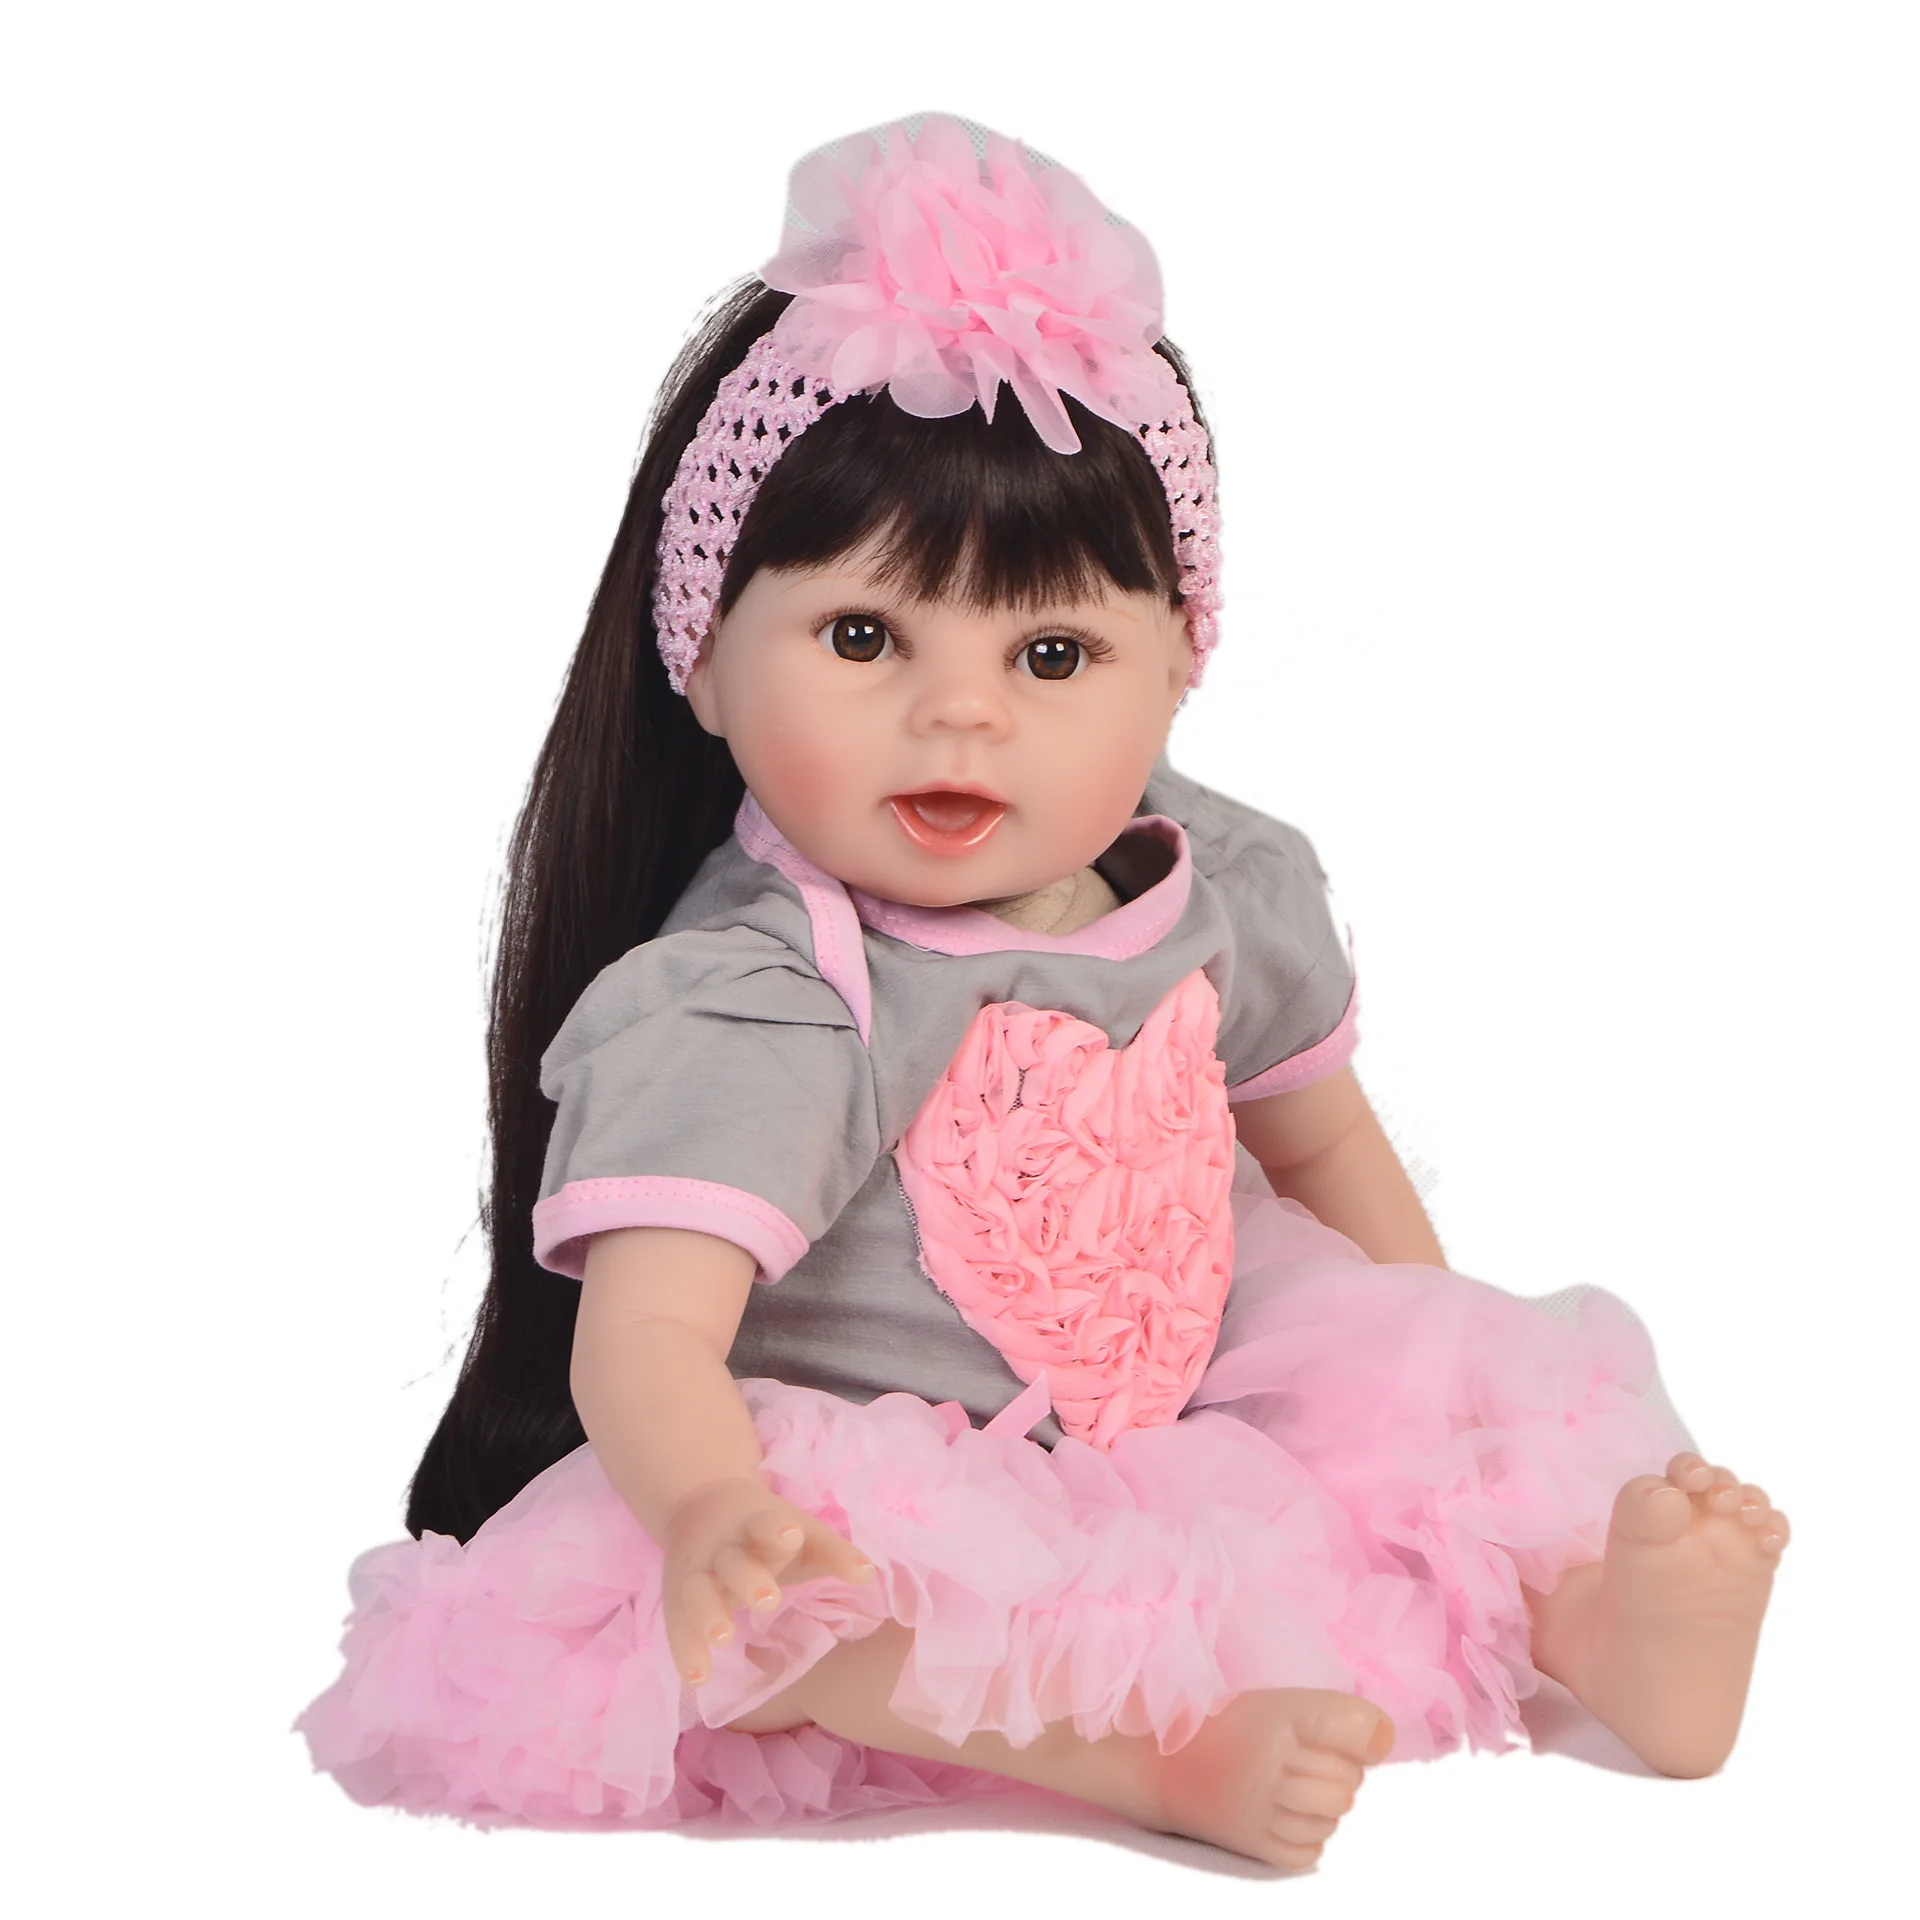  Keiumi22-Inch Reborn Baby Doll Cloth Body Model Infant Long Hair Princess New Style